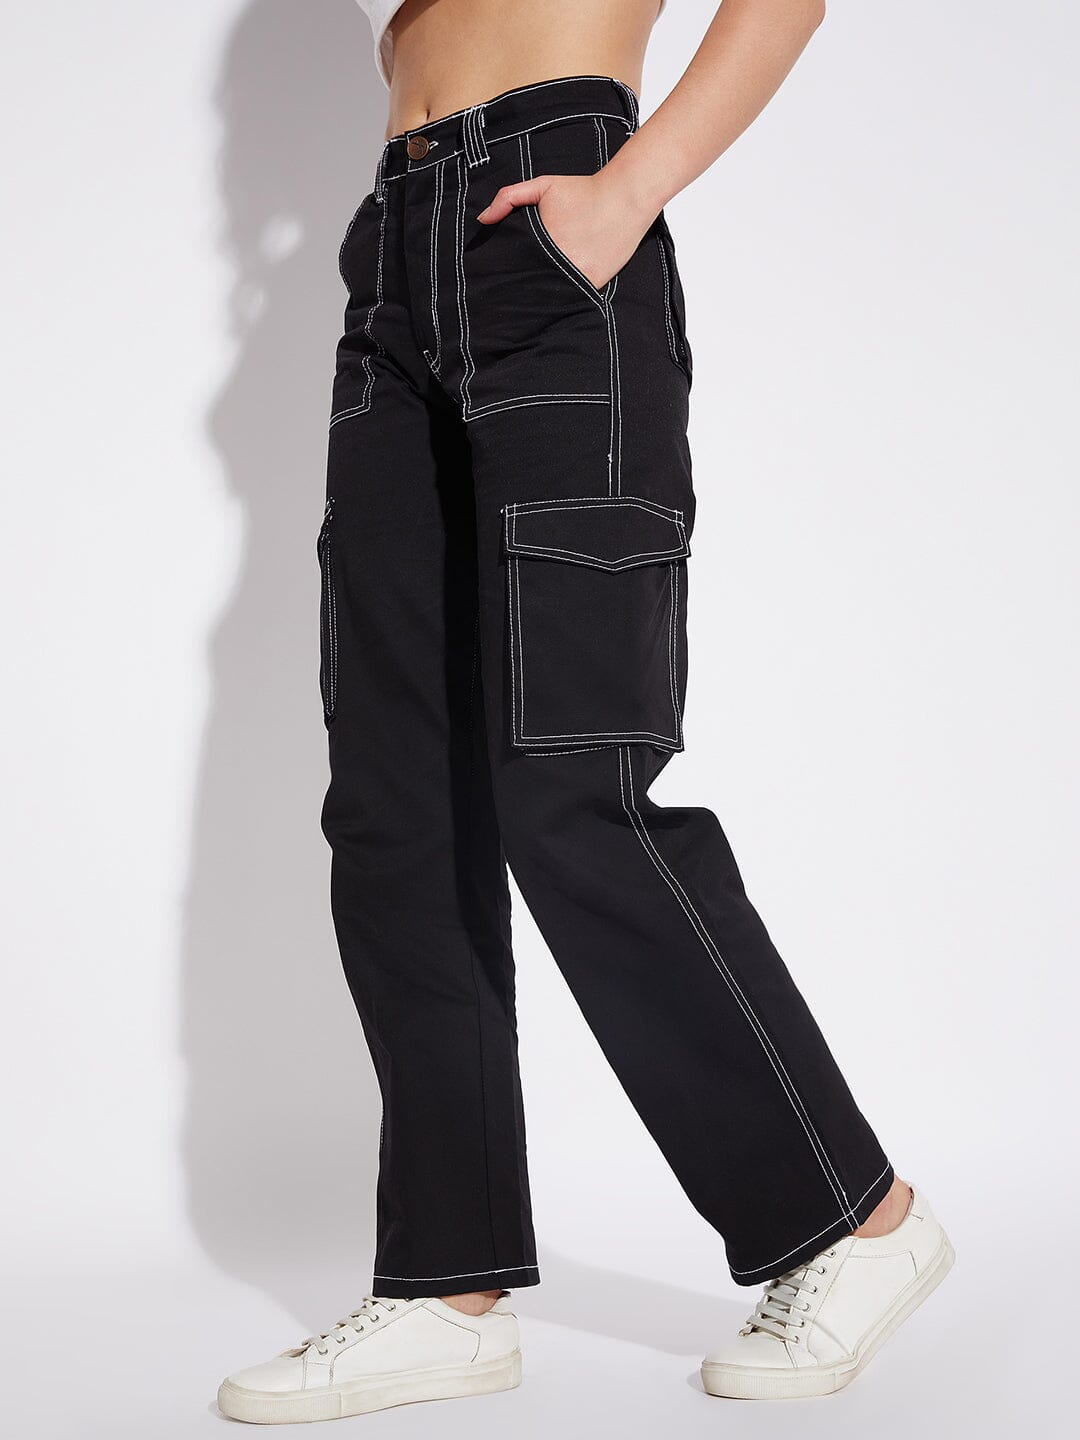 Emily Ratajkowski's Practical Pants Are a Throwback Style